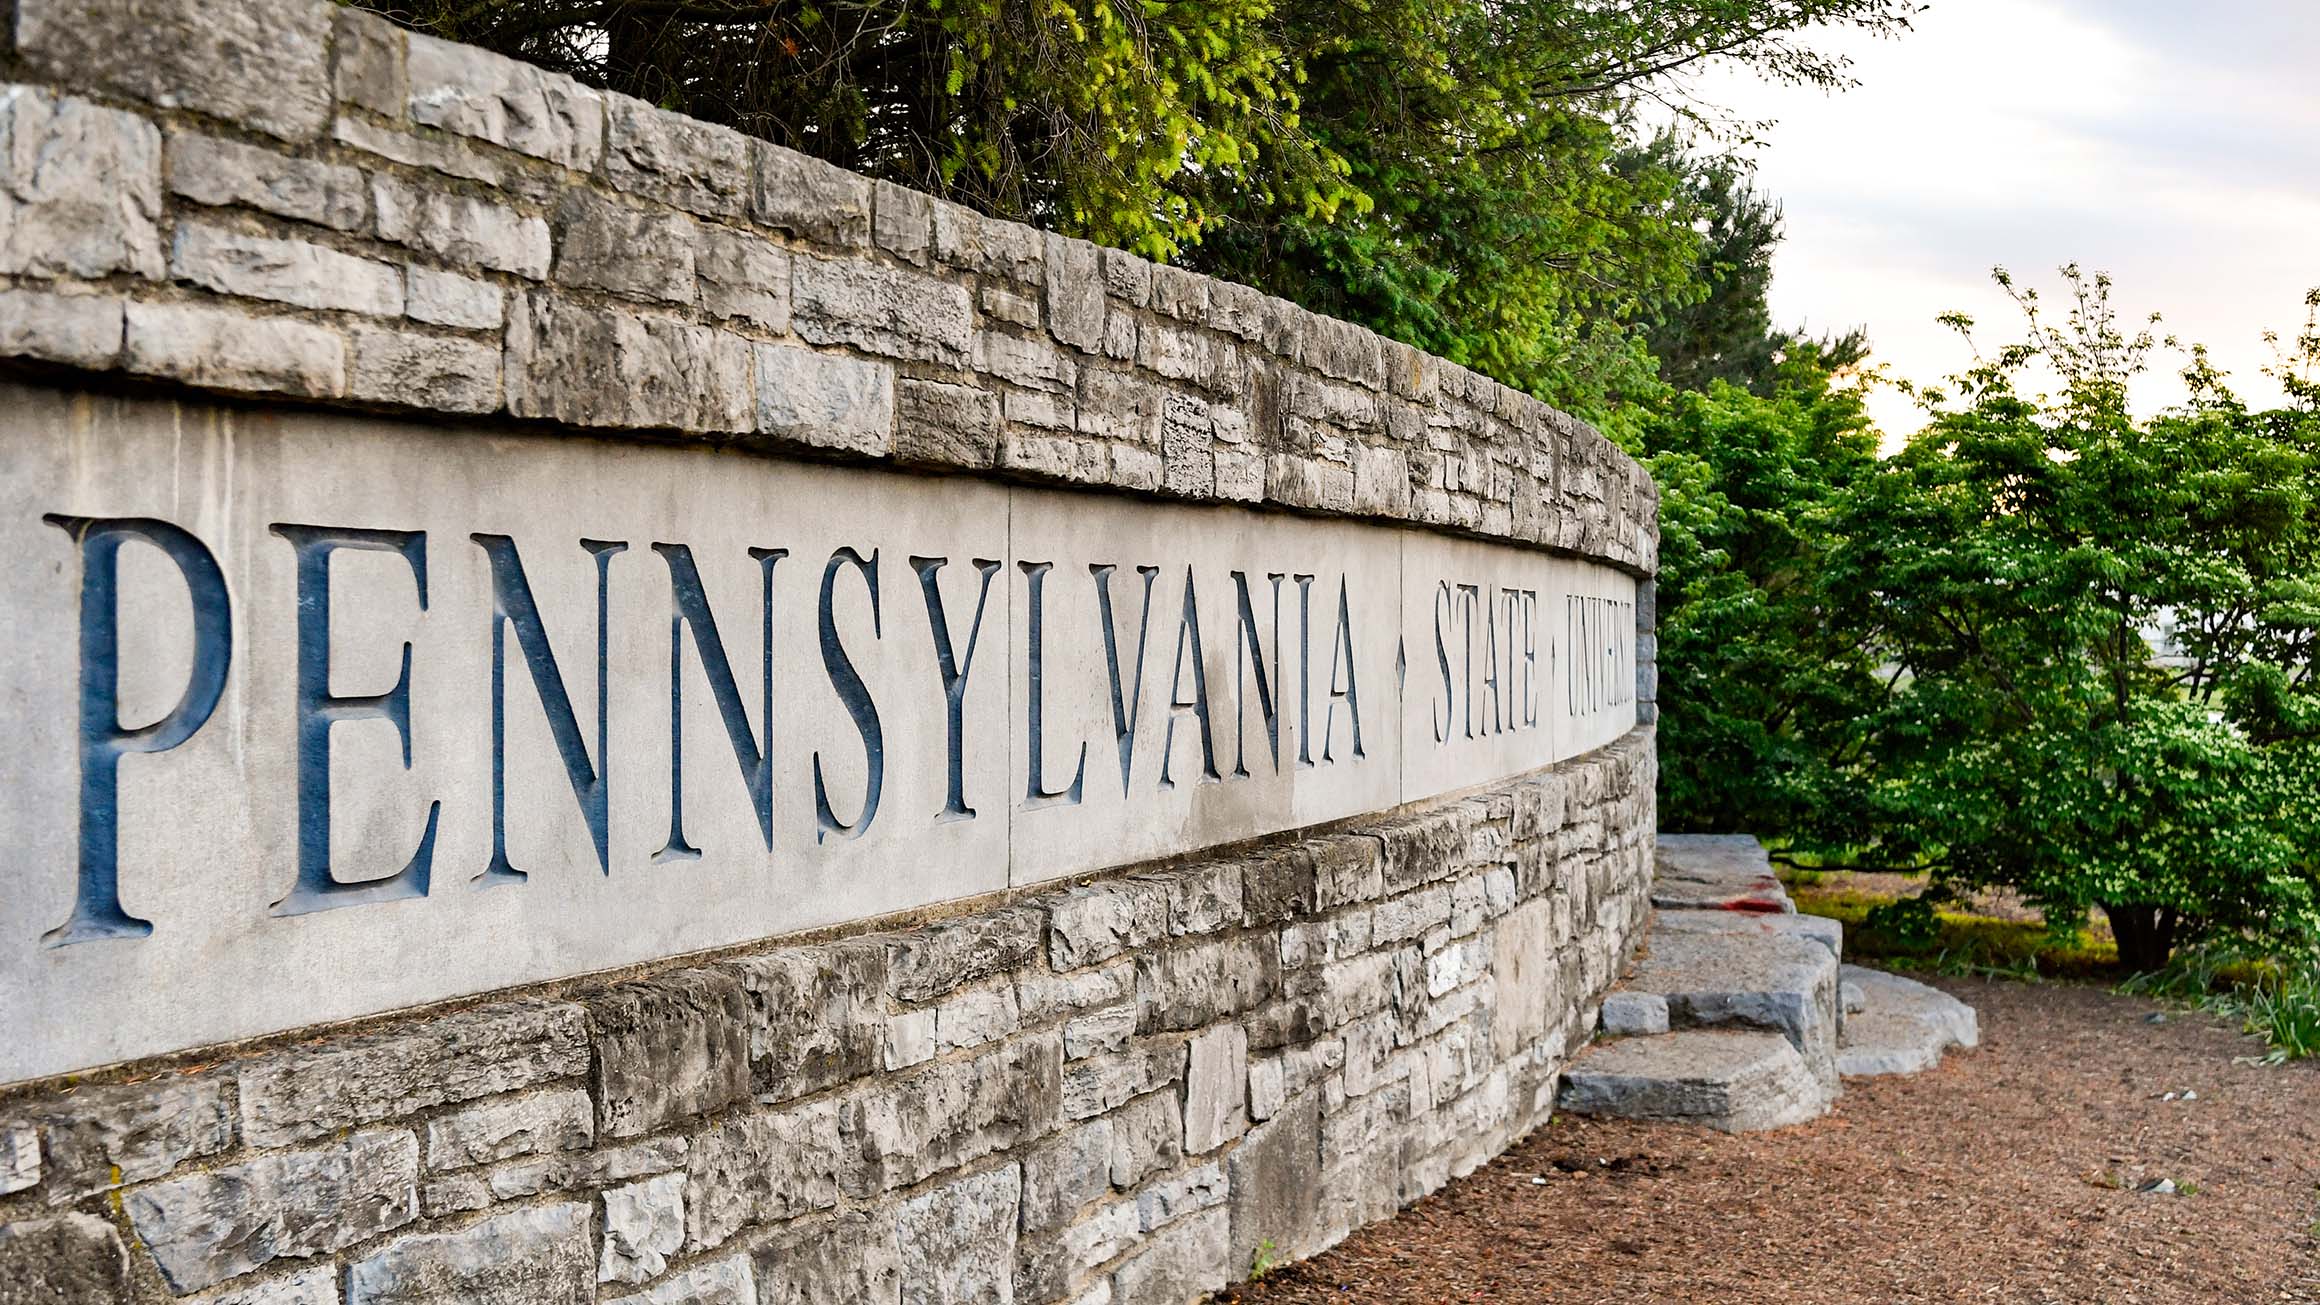 Pennsylvania State University sign.